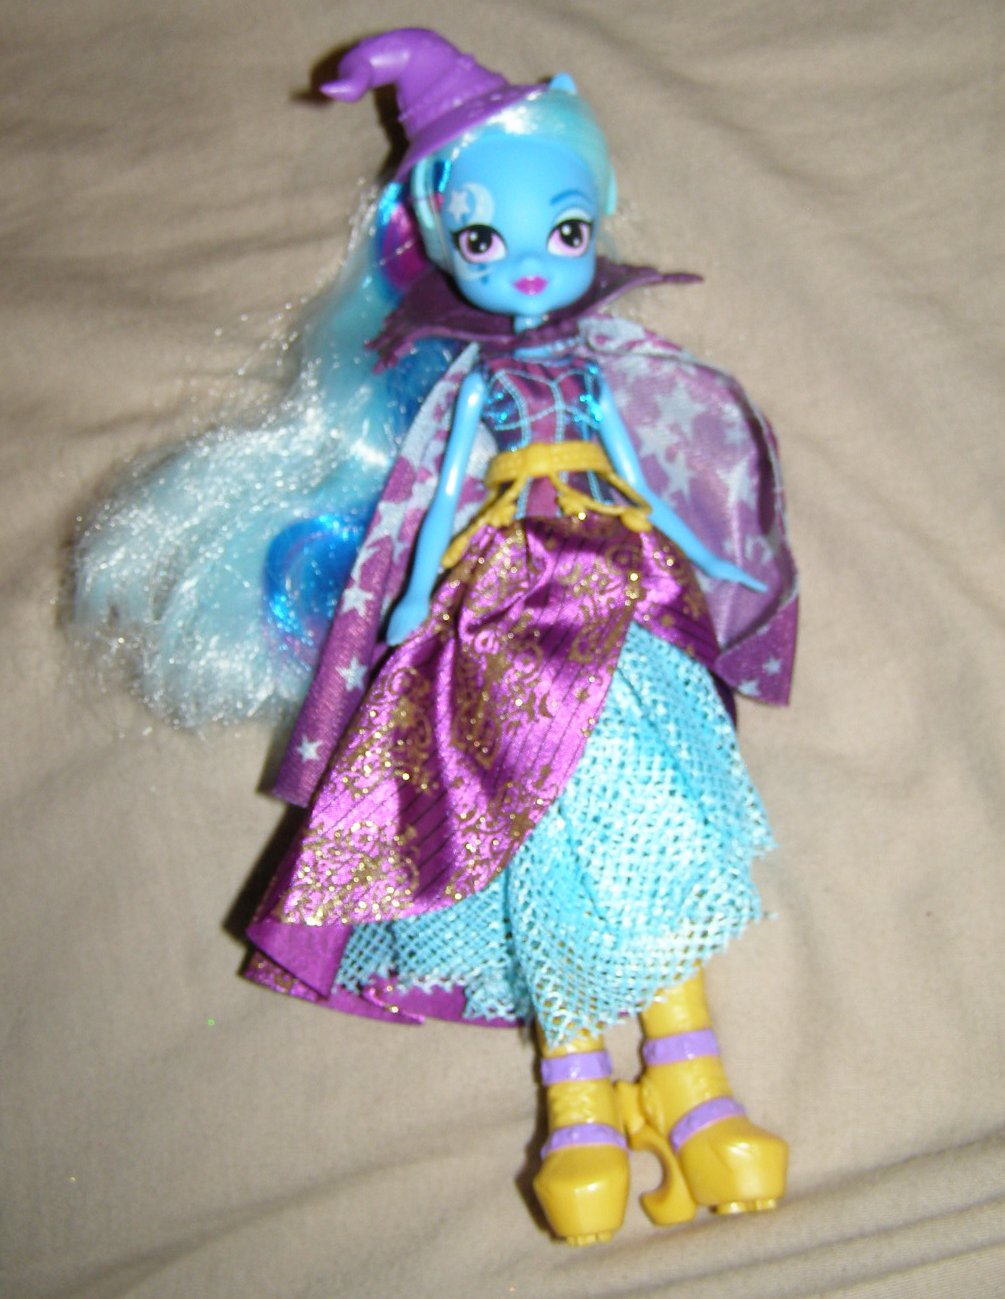 trixie equestria girl doll